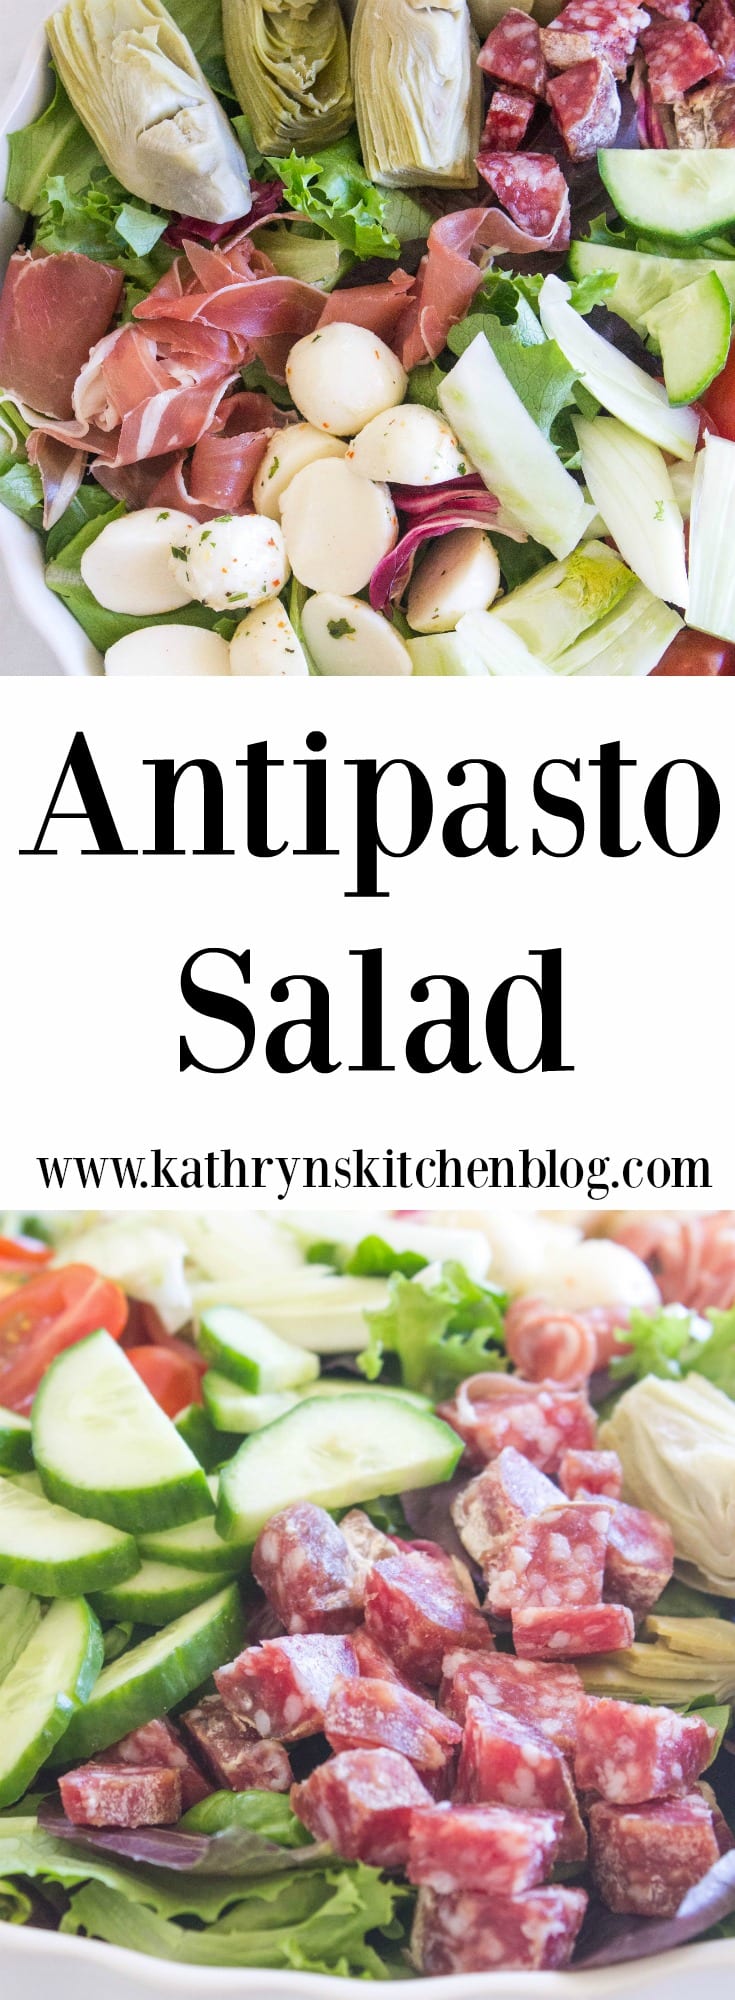 AntiPasto Salad